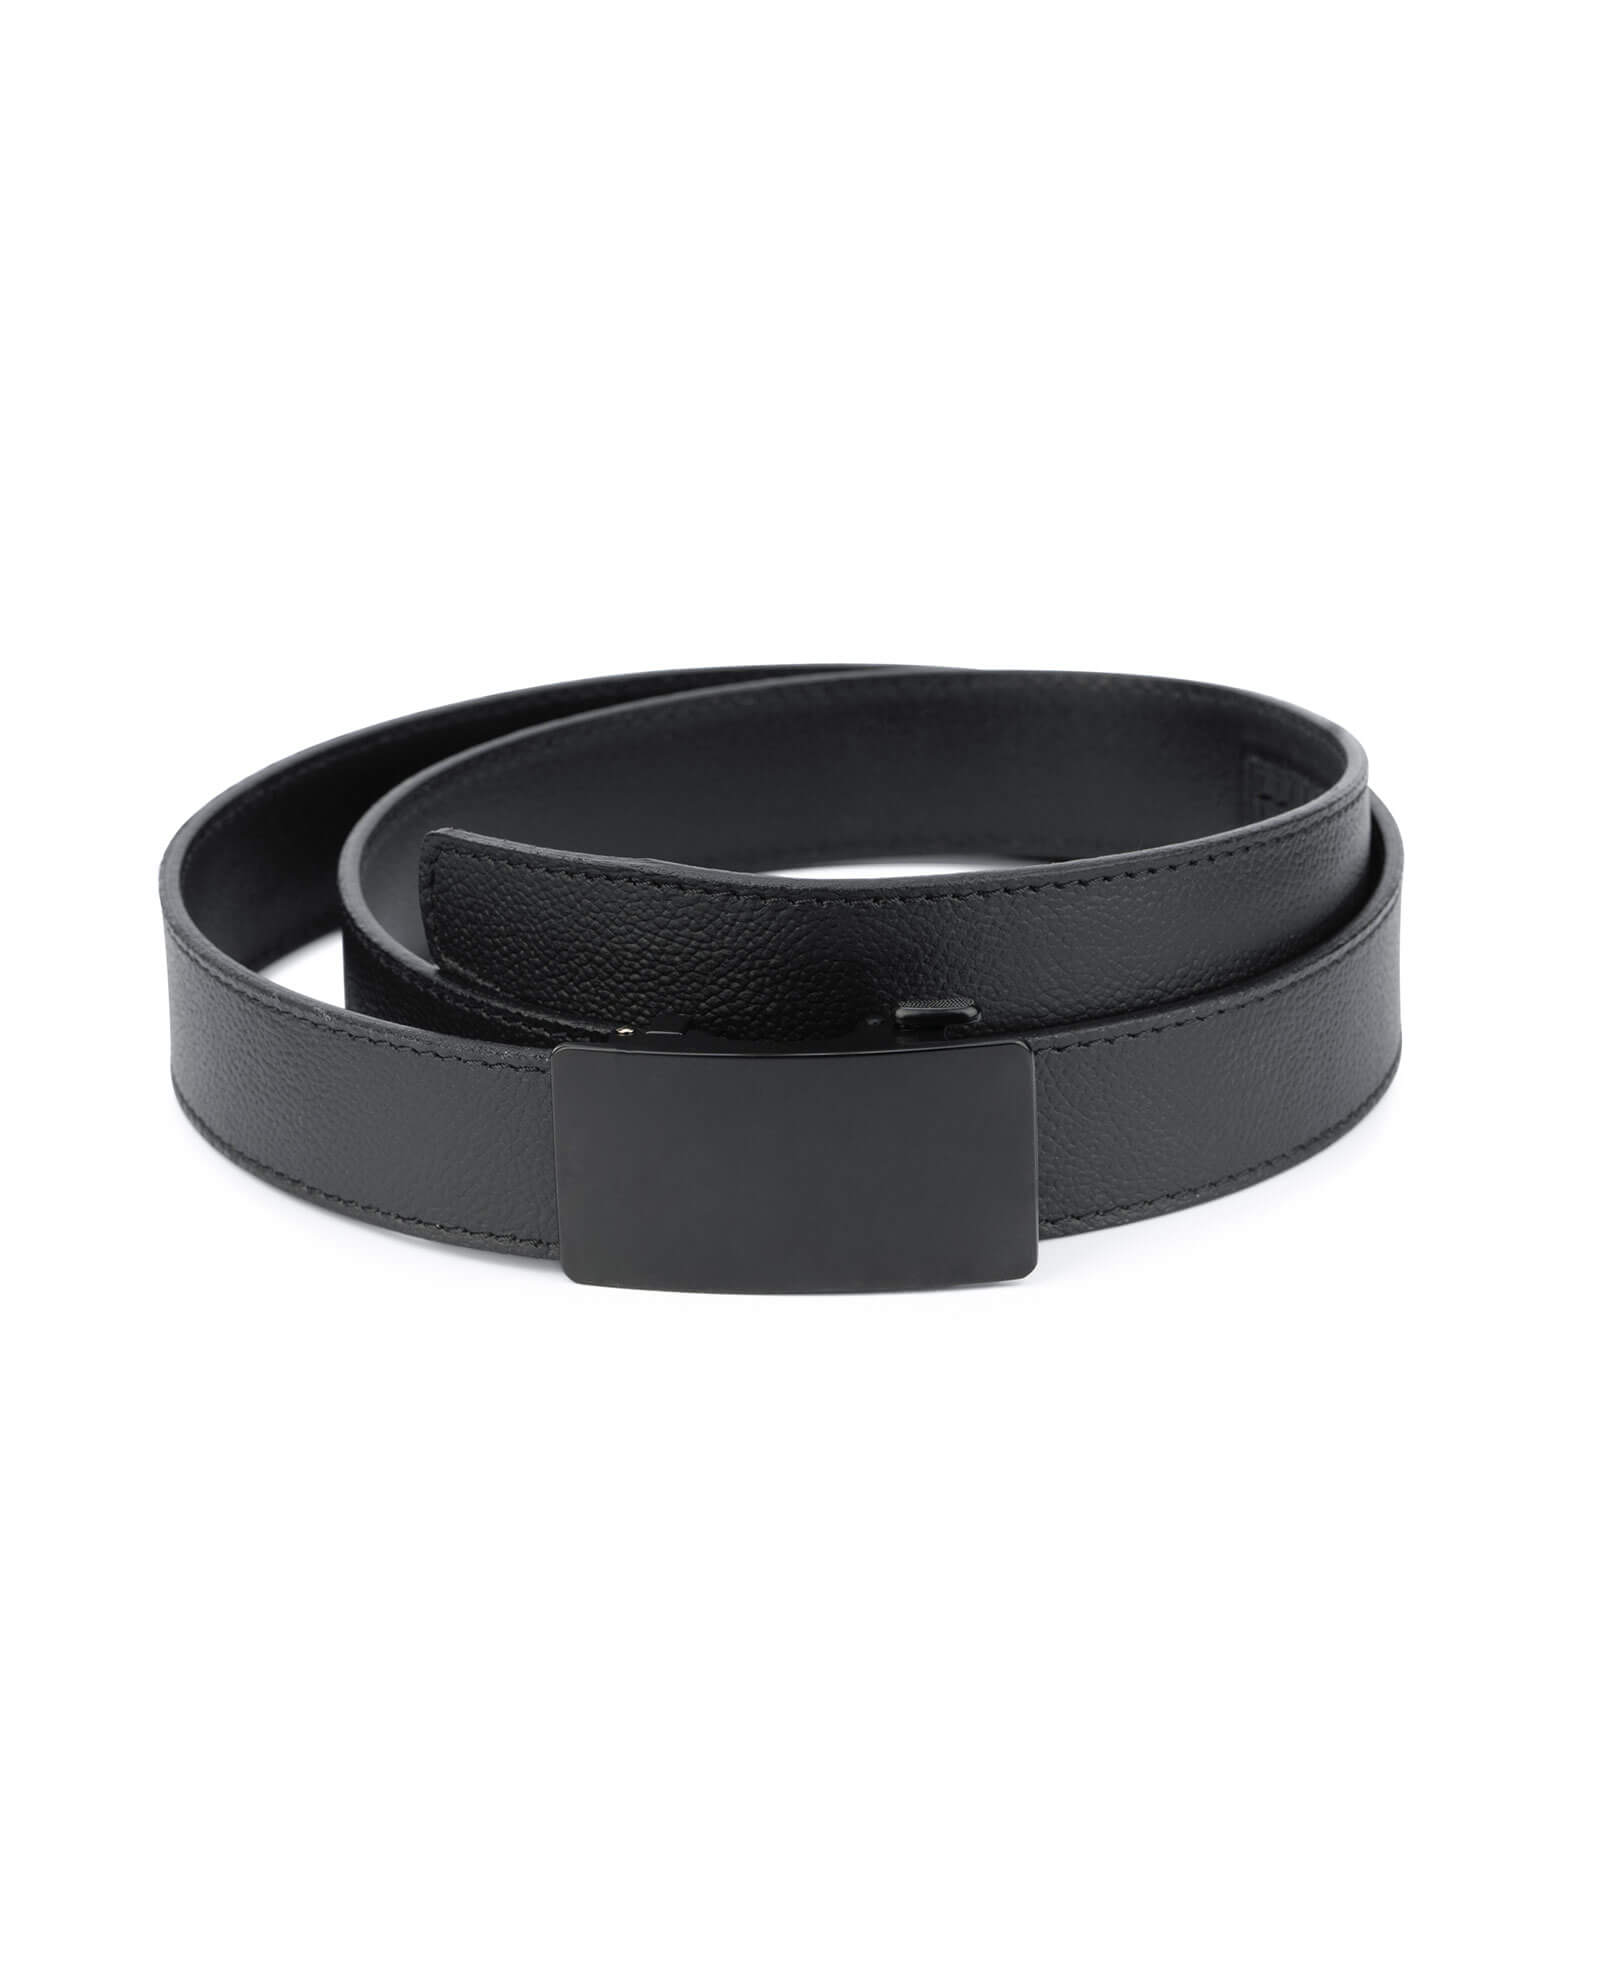 Buy Black Leather Comfort Click Belt | Blank Buckle | LeatherBeltsOnline